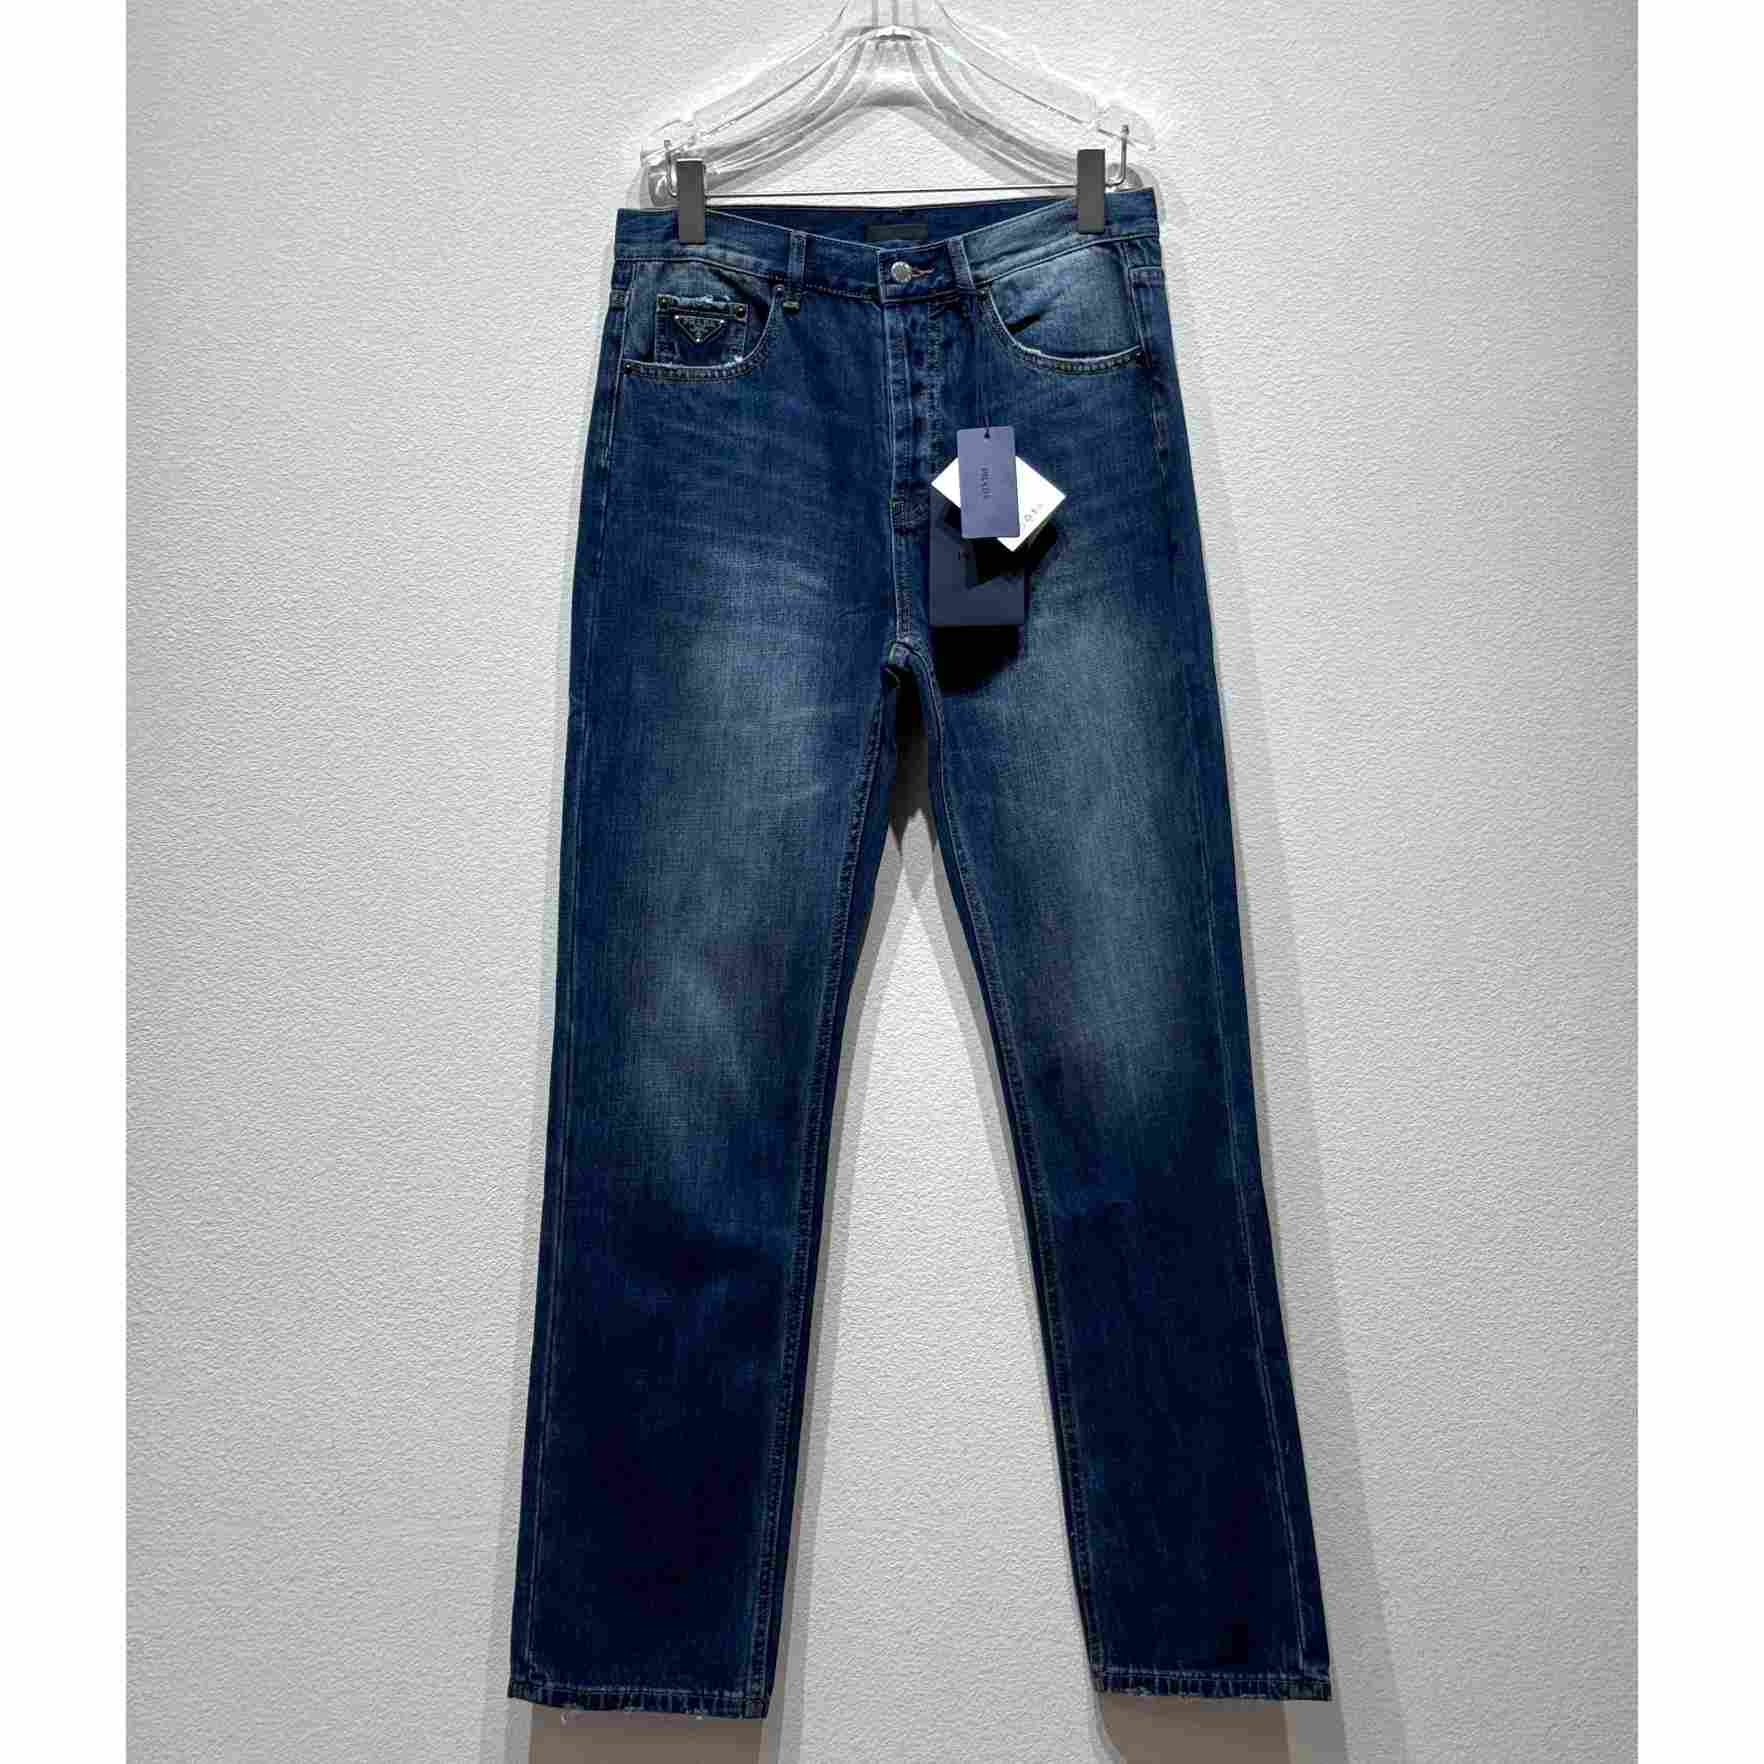 Prada Jeans - everydesigner